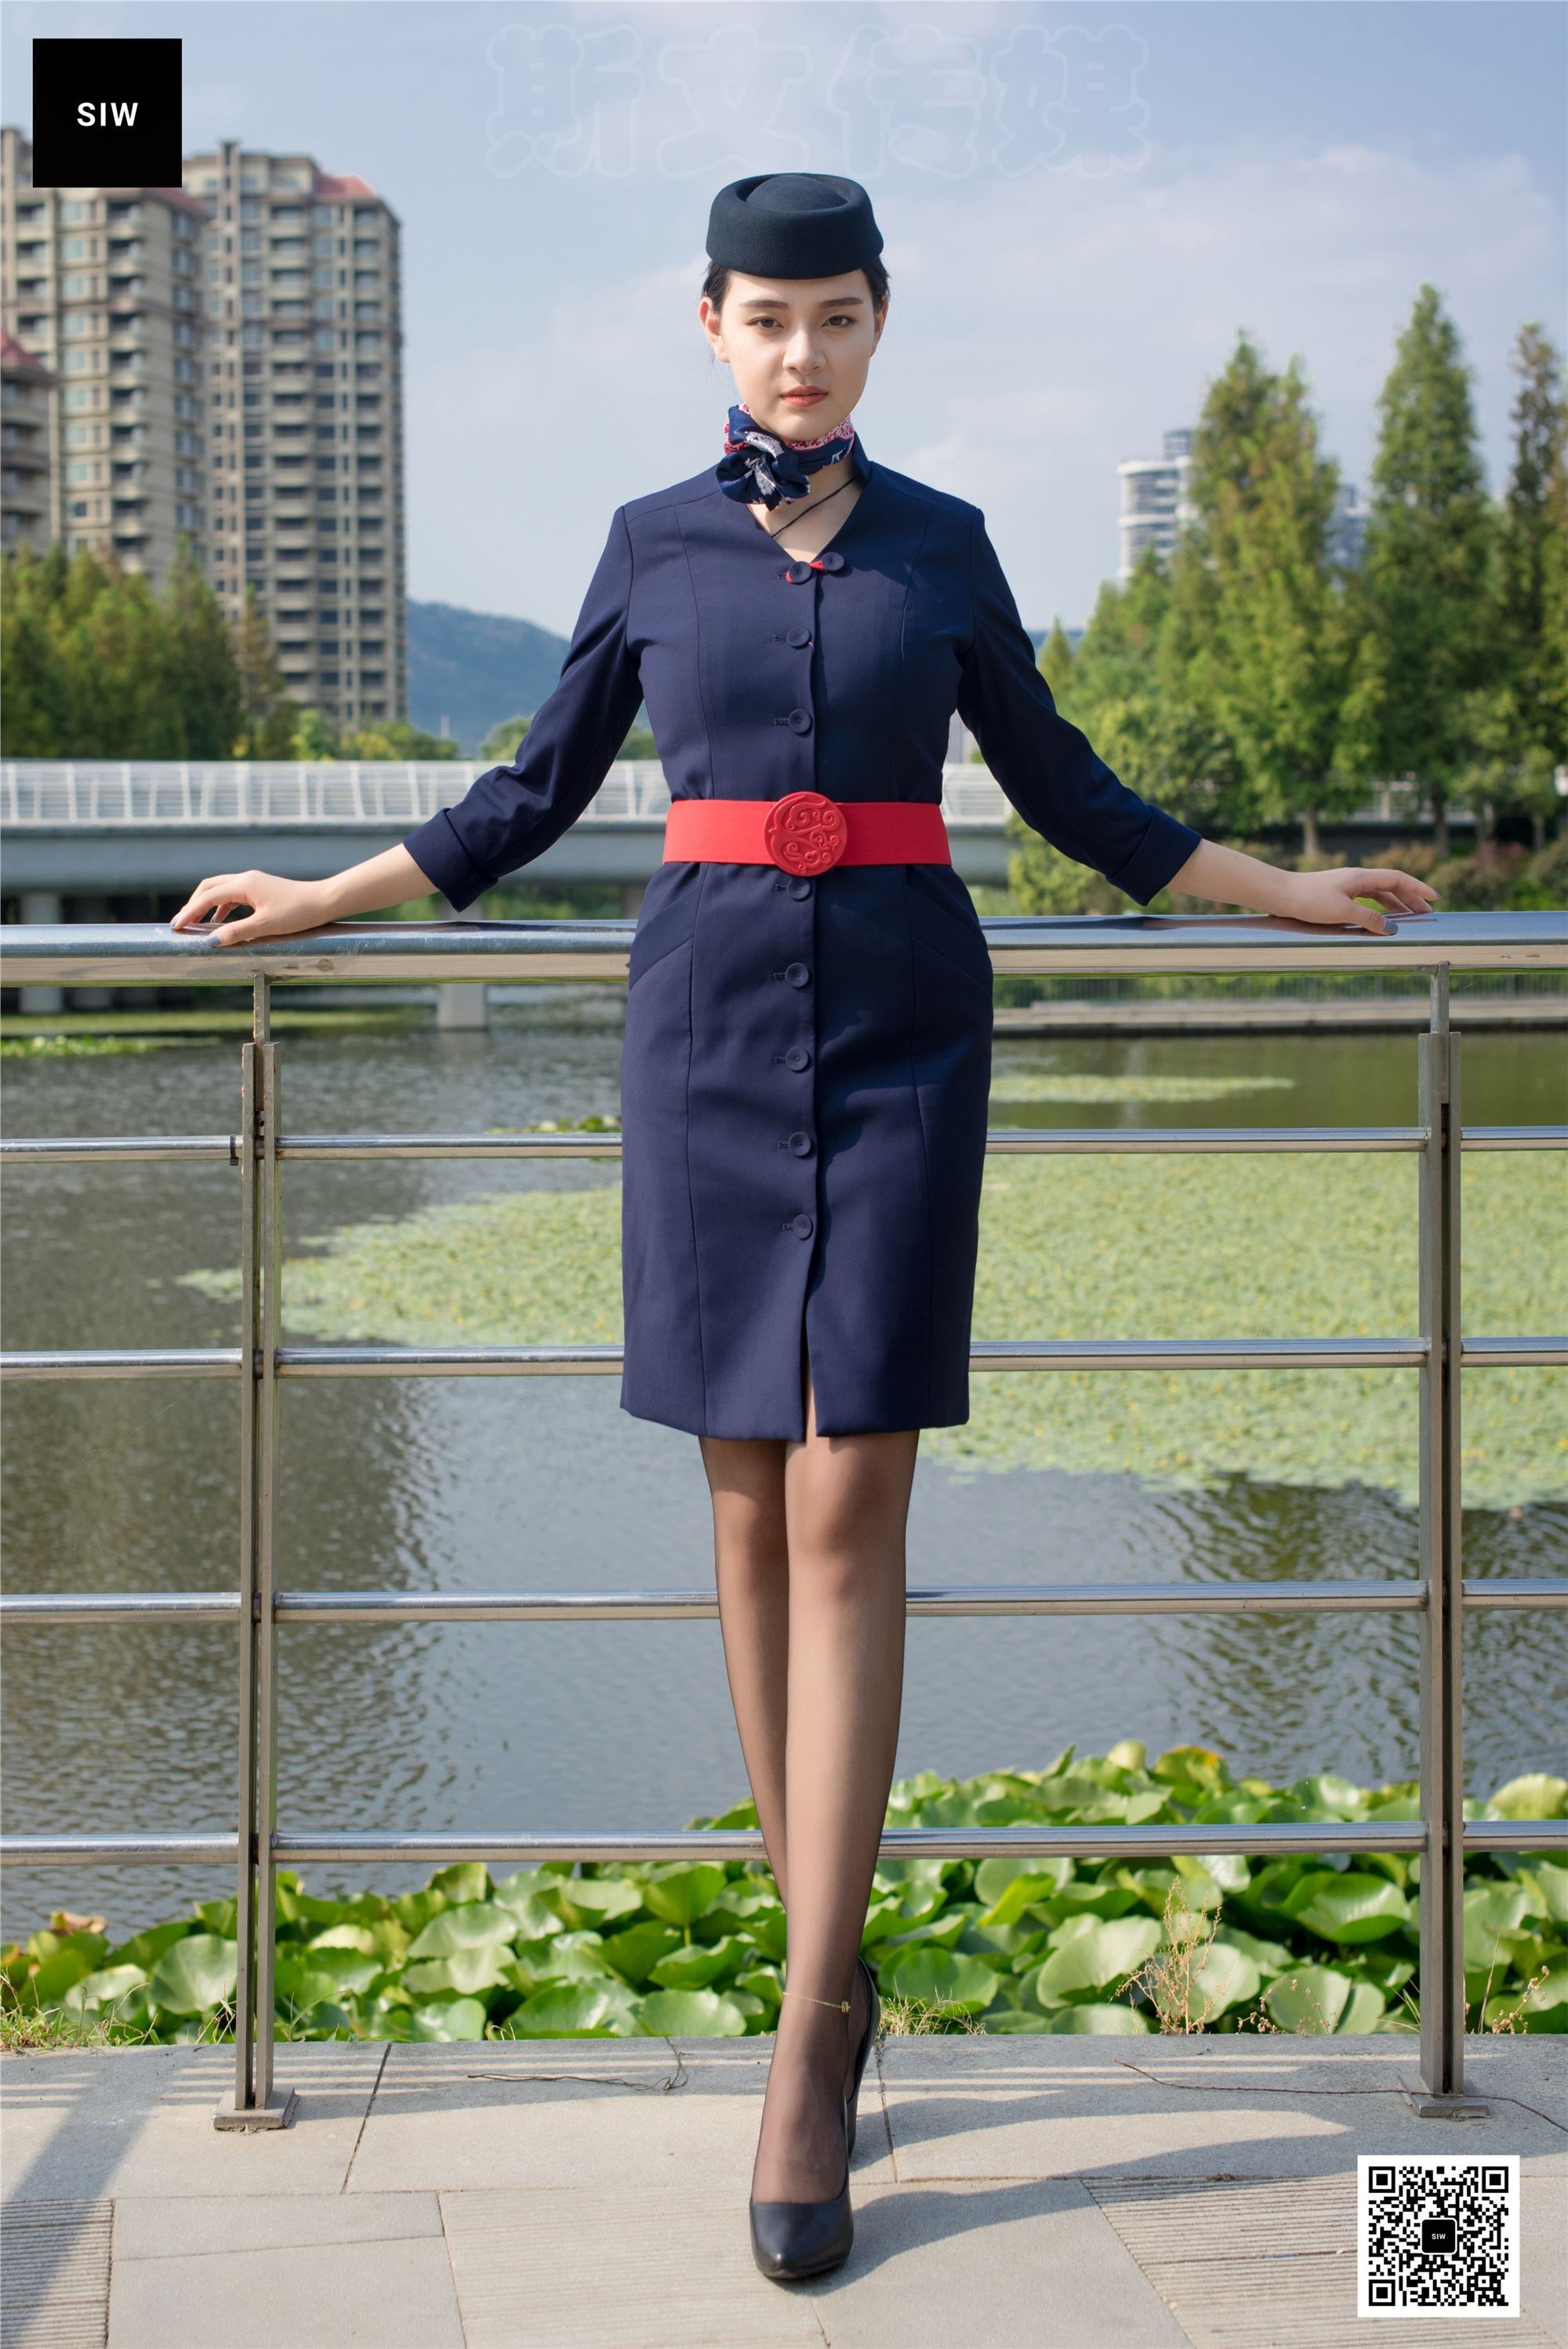 SIW Siwen Media 051 China Eastern Airlines uniform, cap, scarf, skirt, four pieces set - Siqi